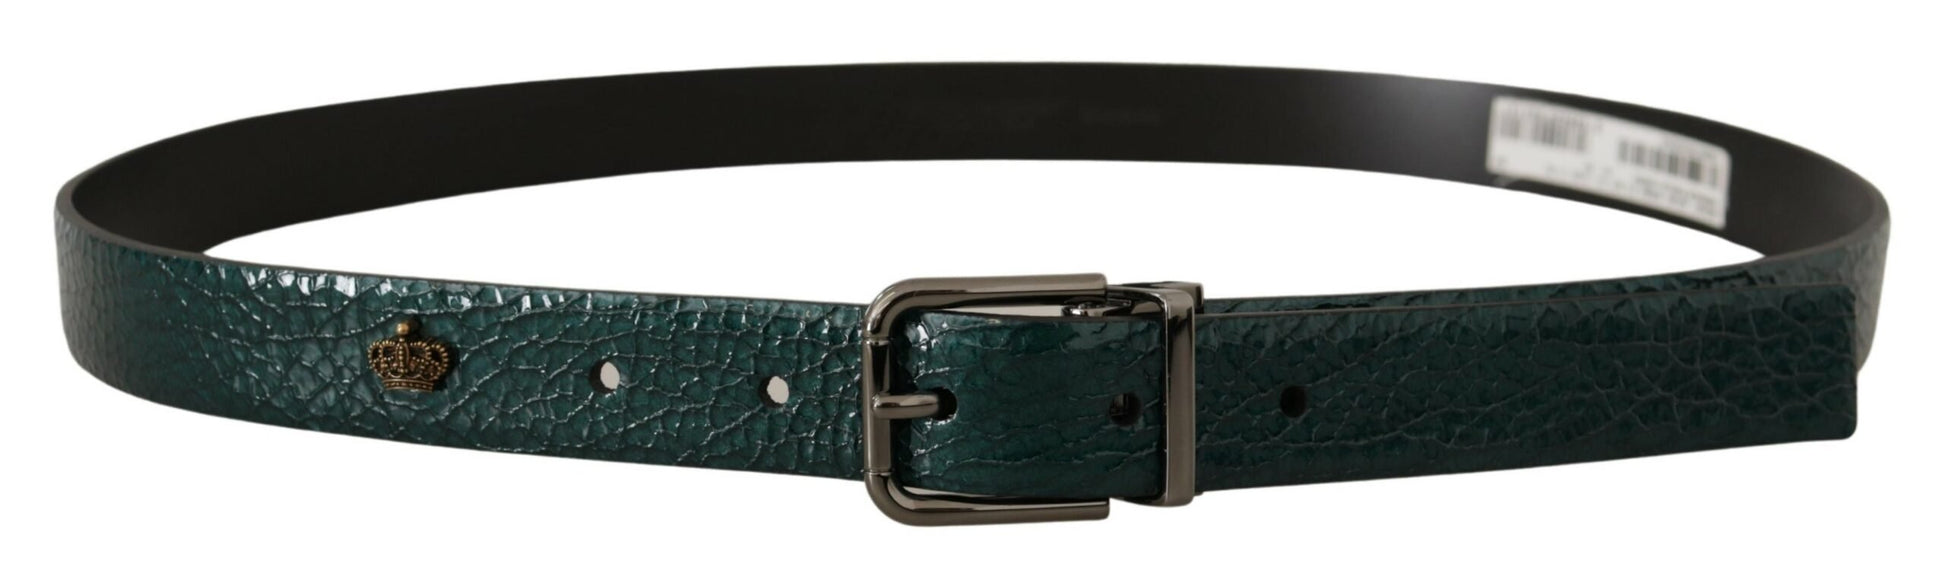 Dolce & Gabbana Elegant Green Leather Belt with Silver Buckle | Fashionsarah.com